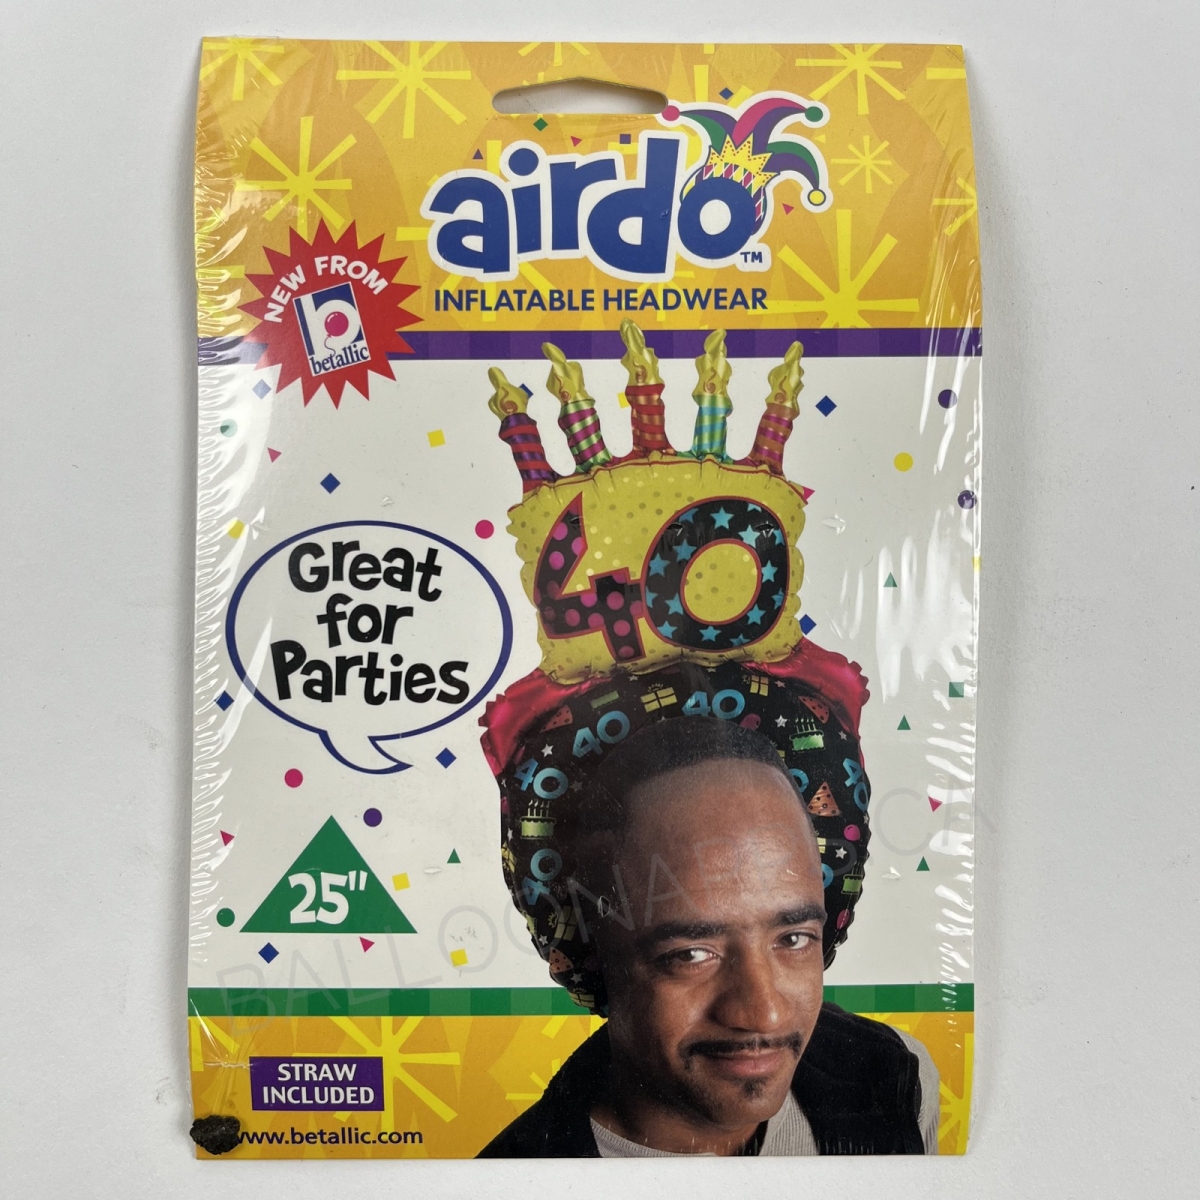 (1) Airdoo - 40th Birthday